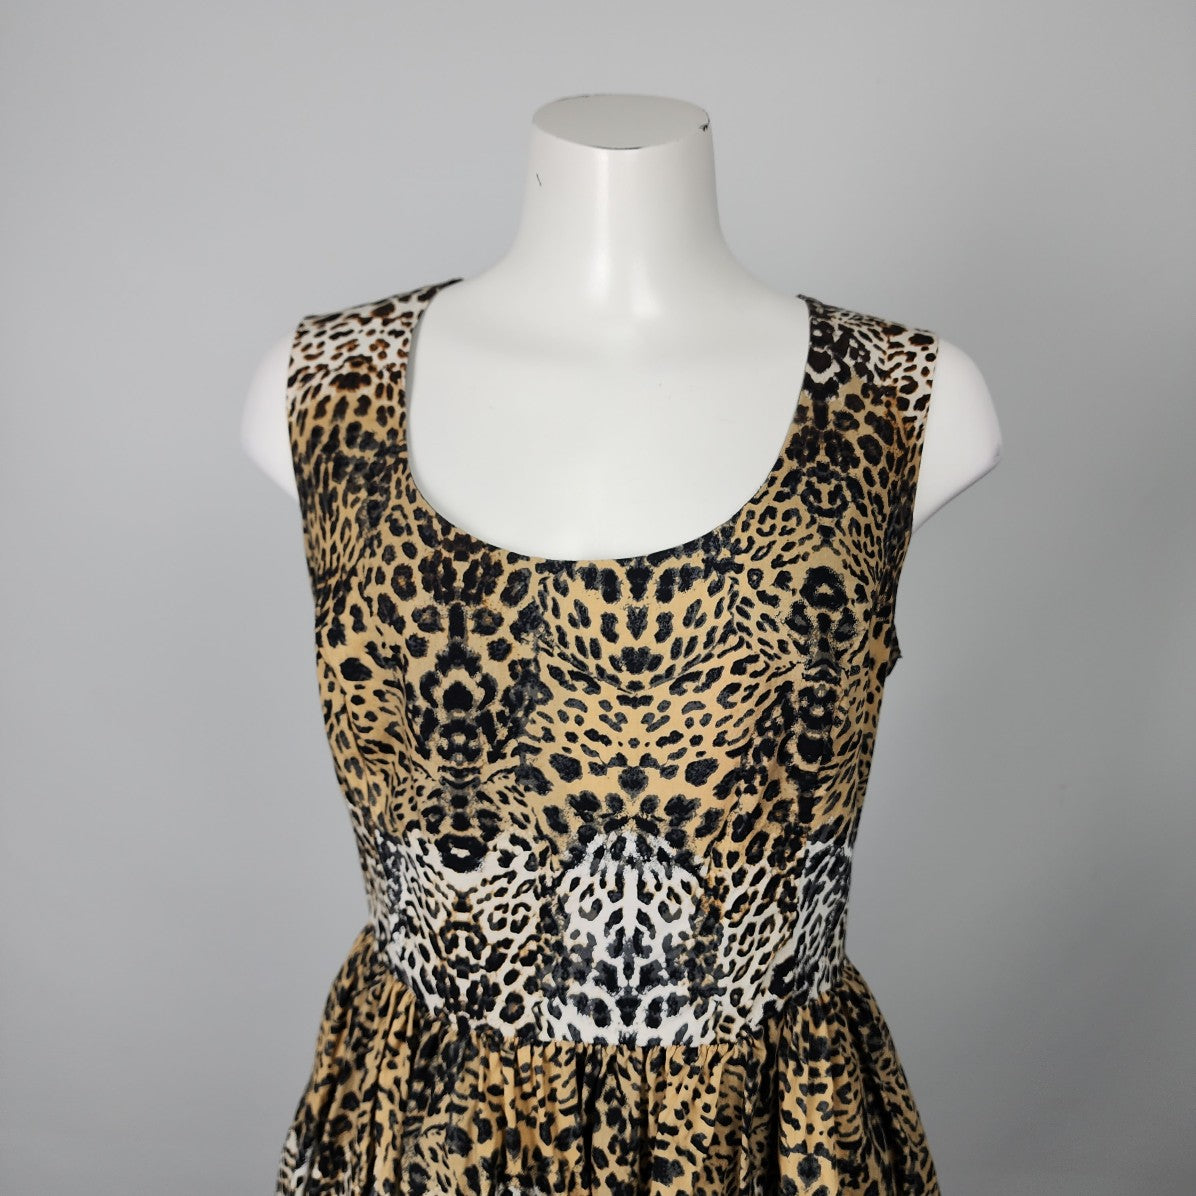 Jessica Simpson Animal Print Fit & Flare Tulle Skirt Dress Size 15/16